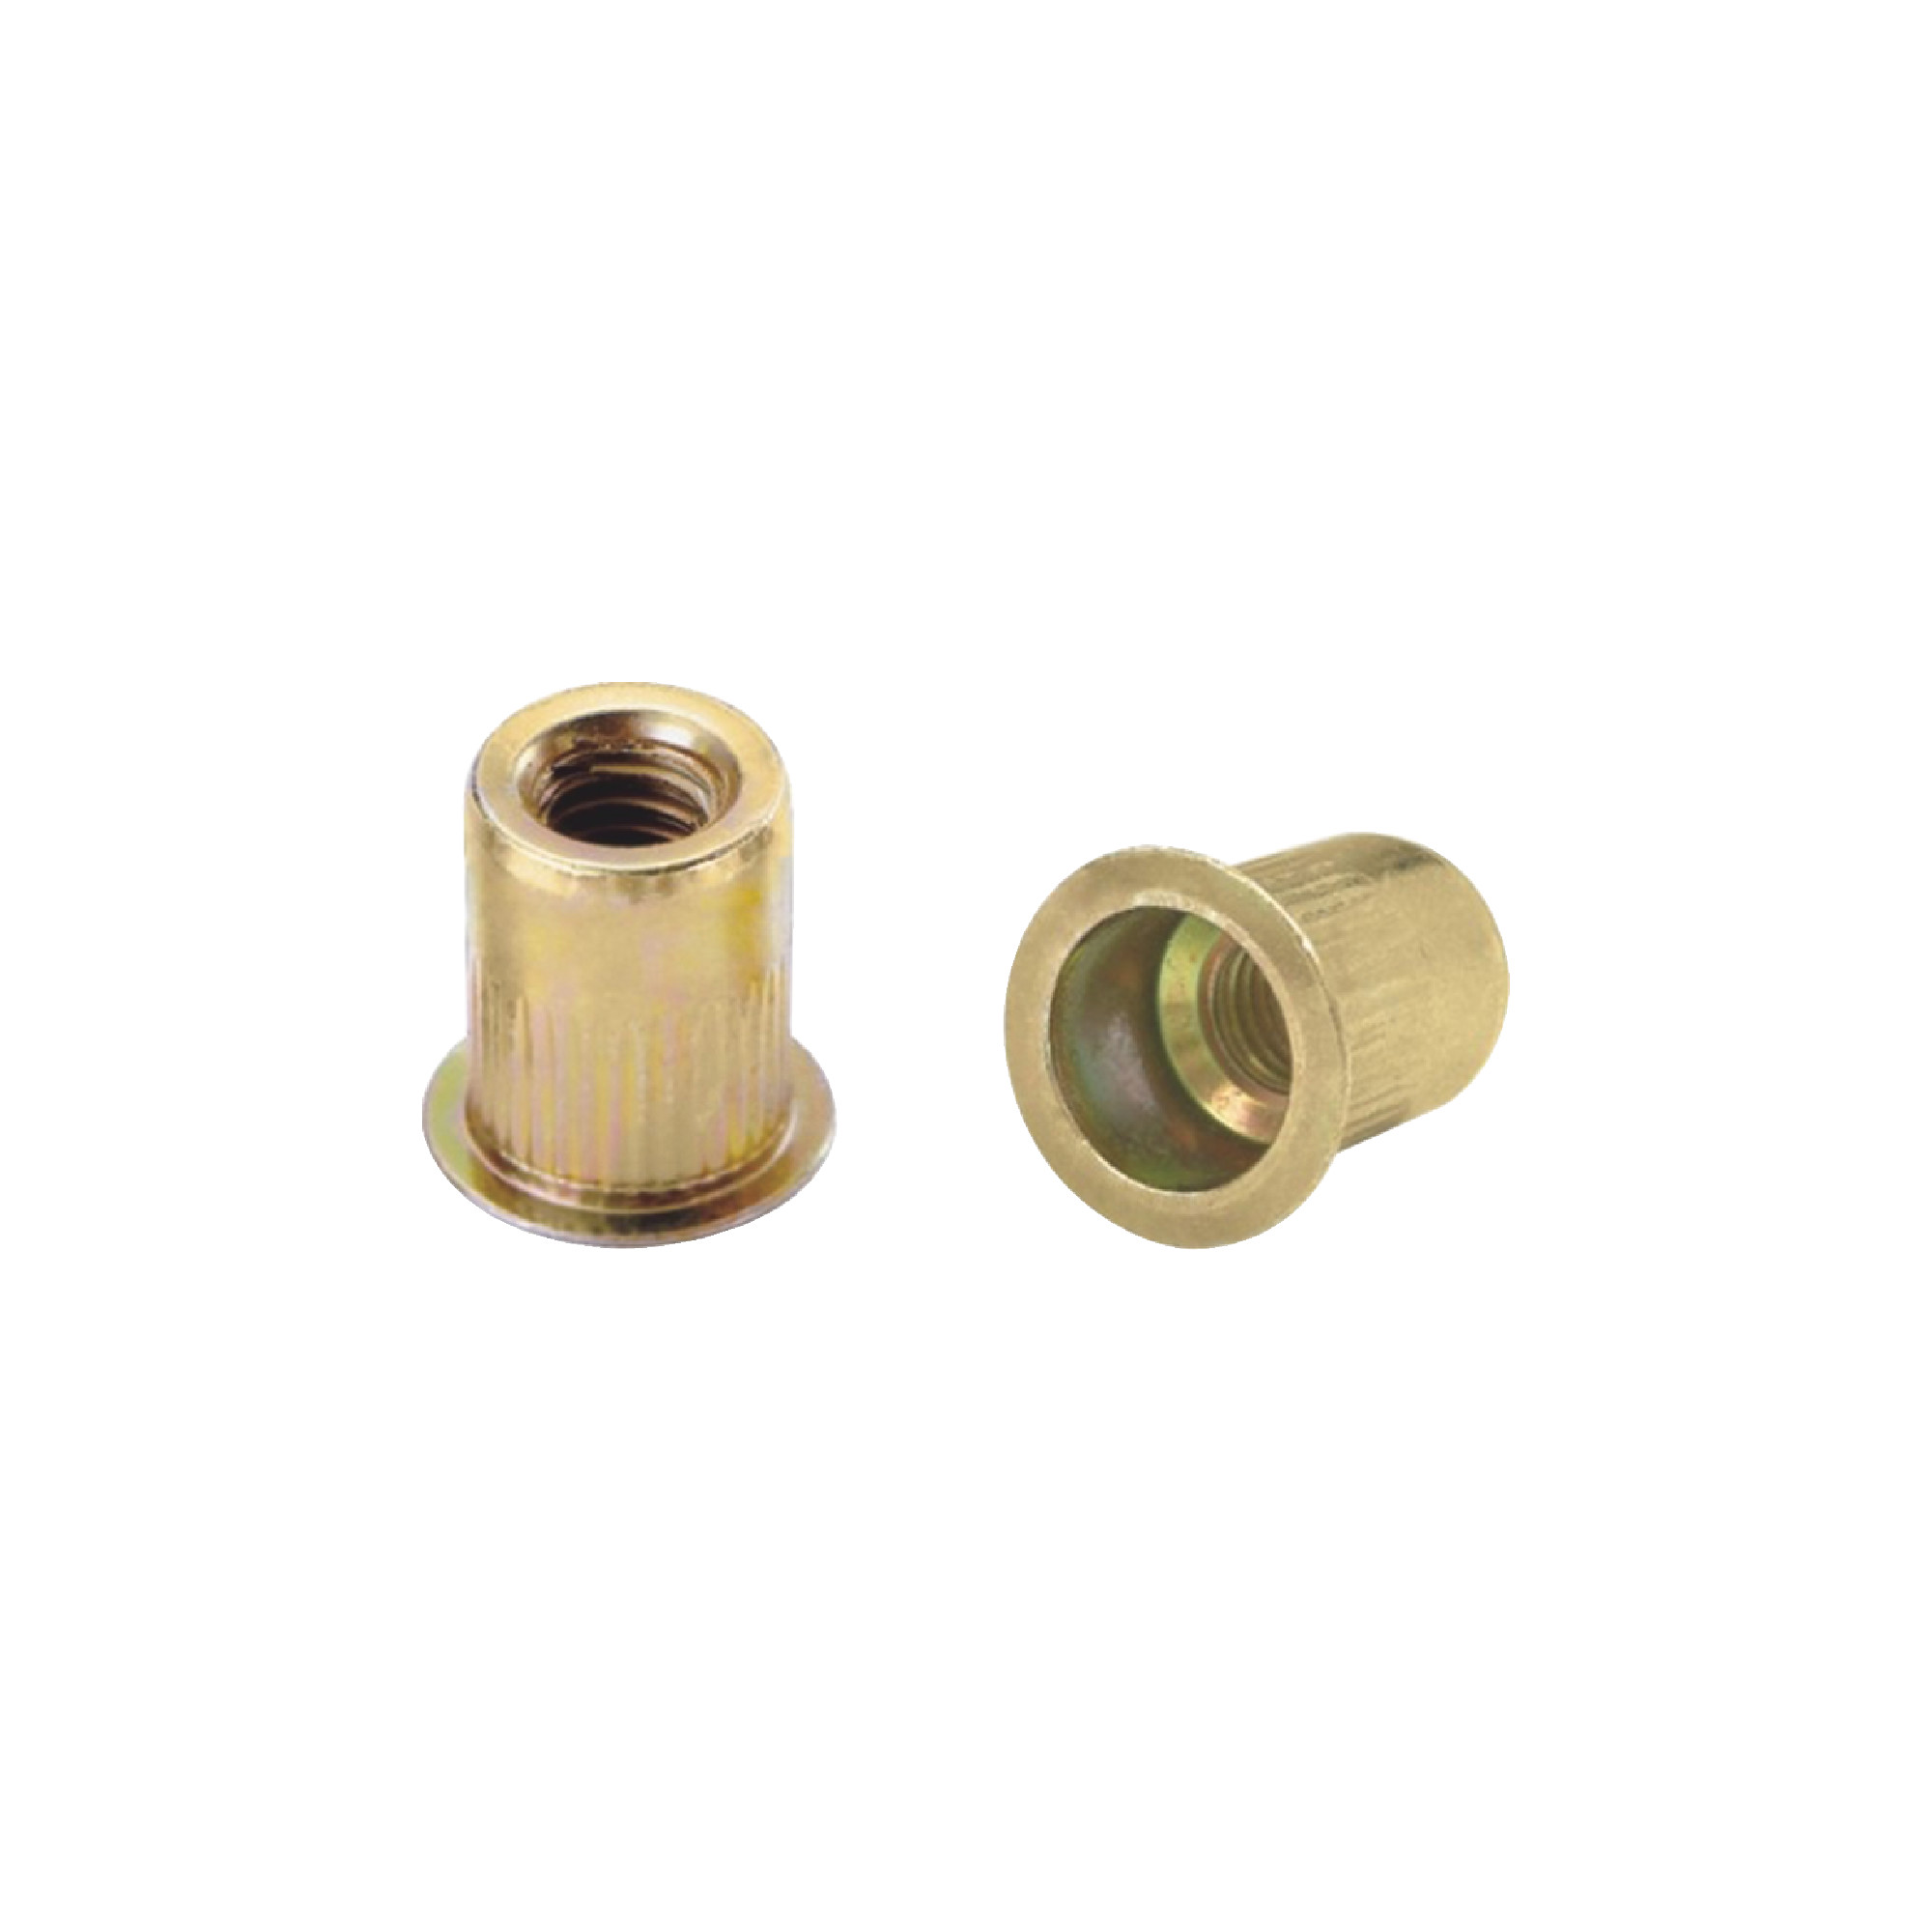 45 Piece M10 Rivet Nut Assortment creates a threaded fixing point on metallic 